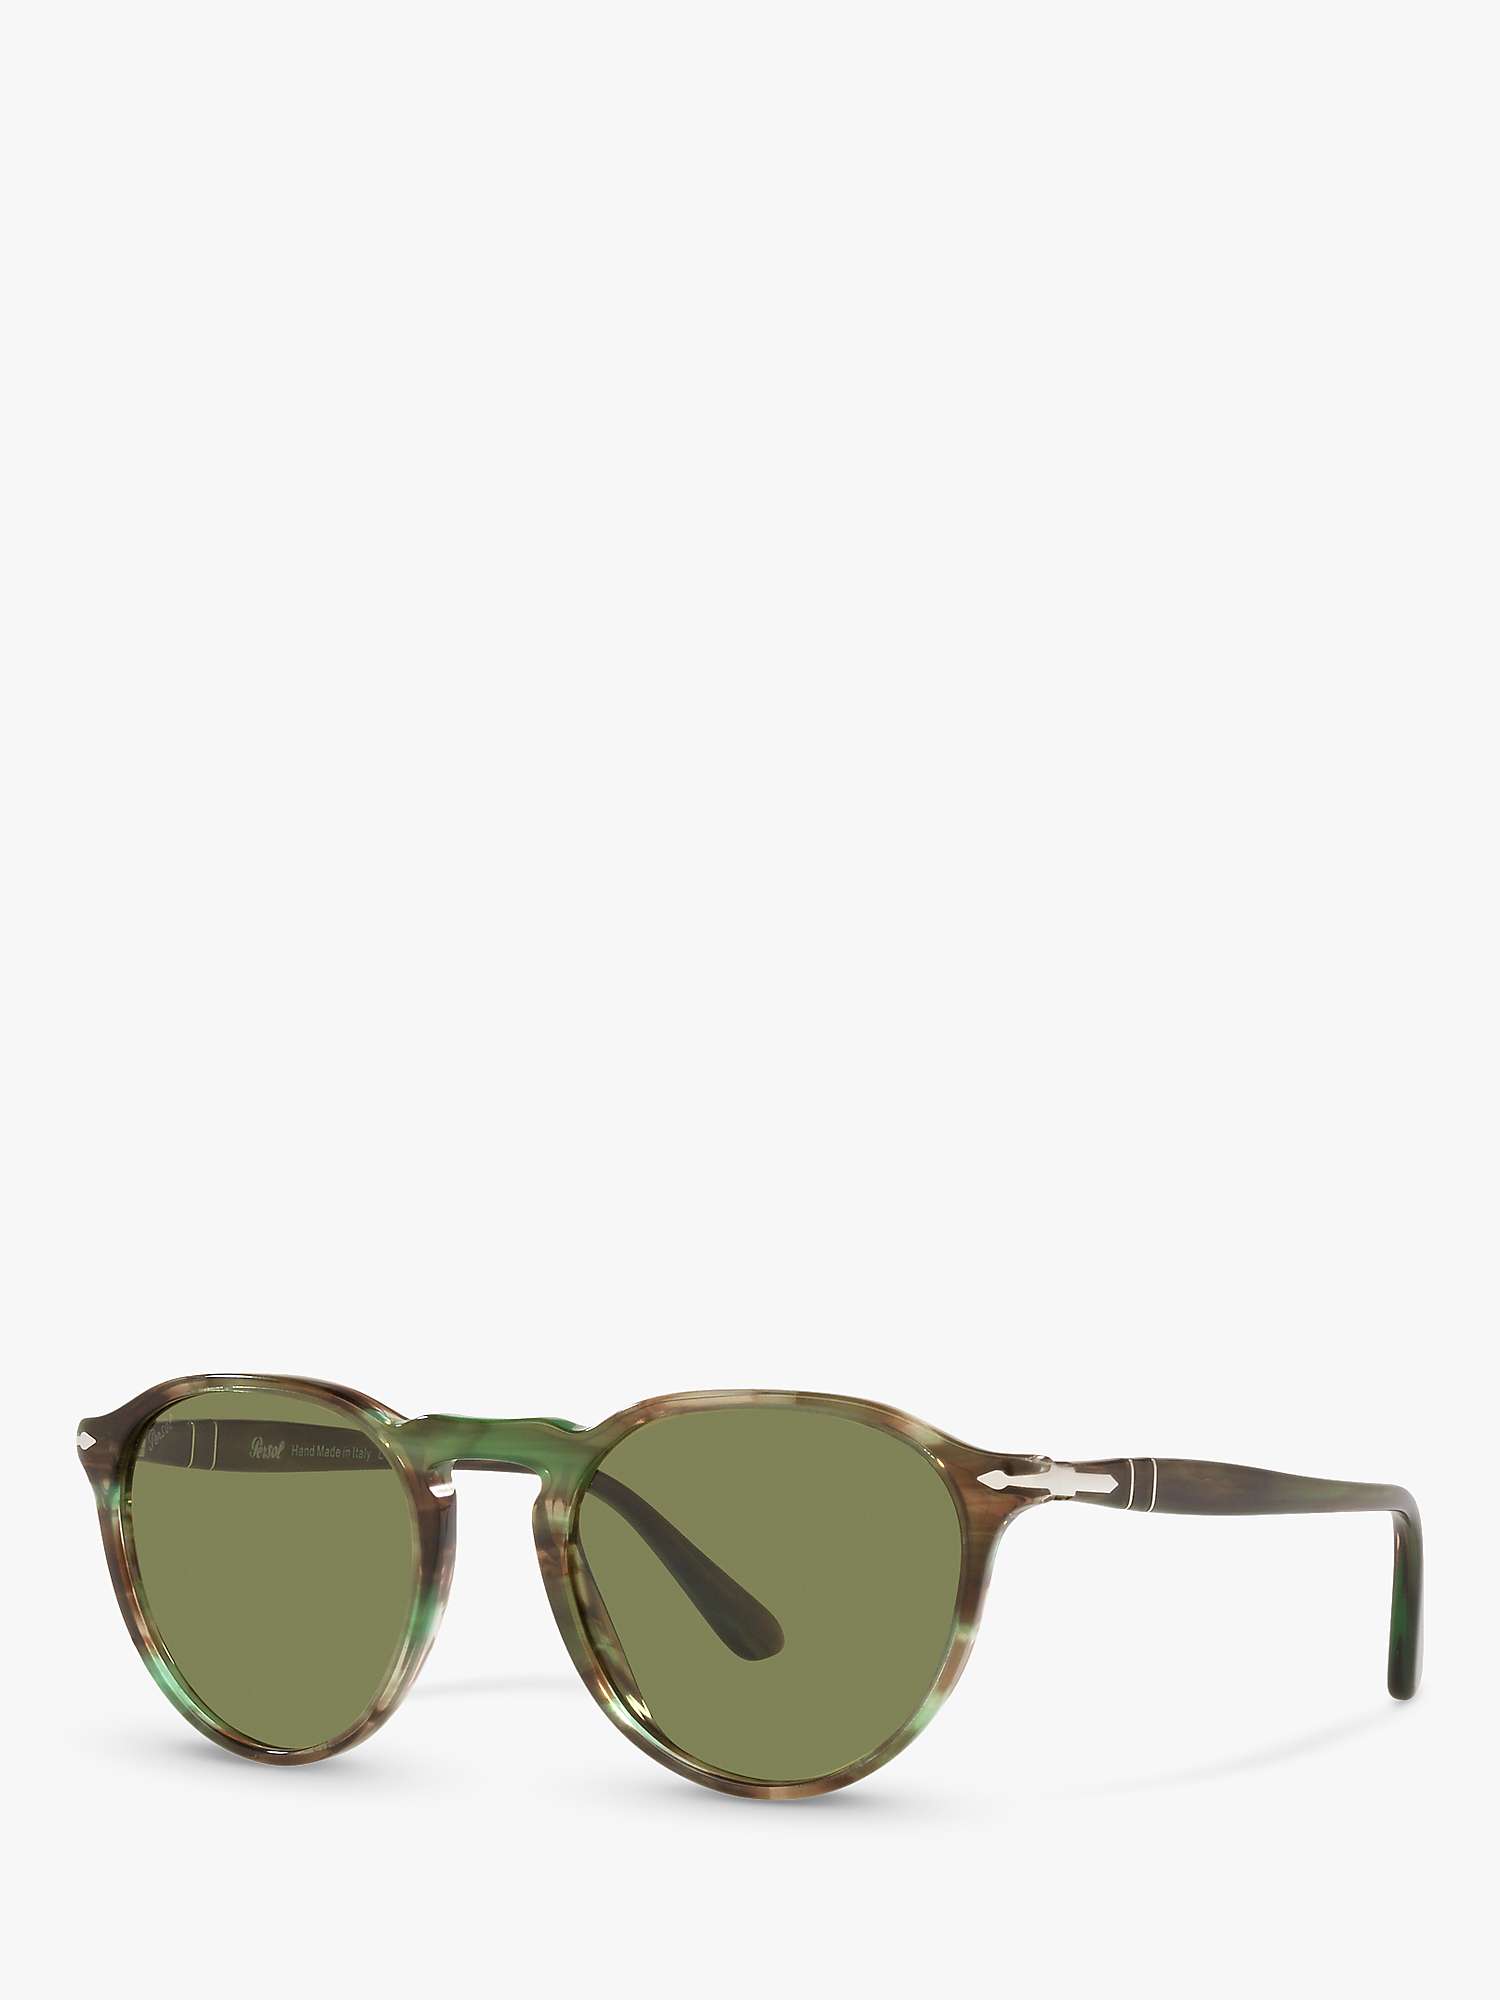 Buy Persol PO3286S Unisex Oval Sunglasses, Green Havana/Green Online at johnlewis.com